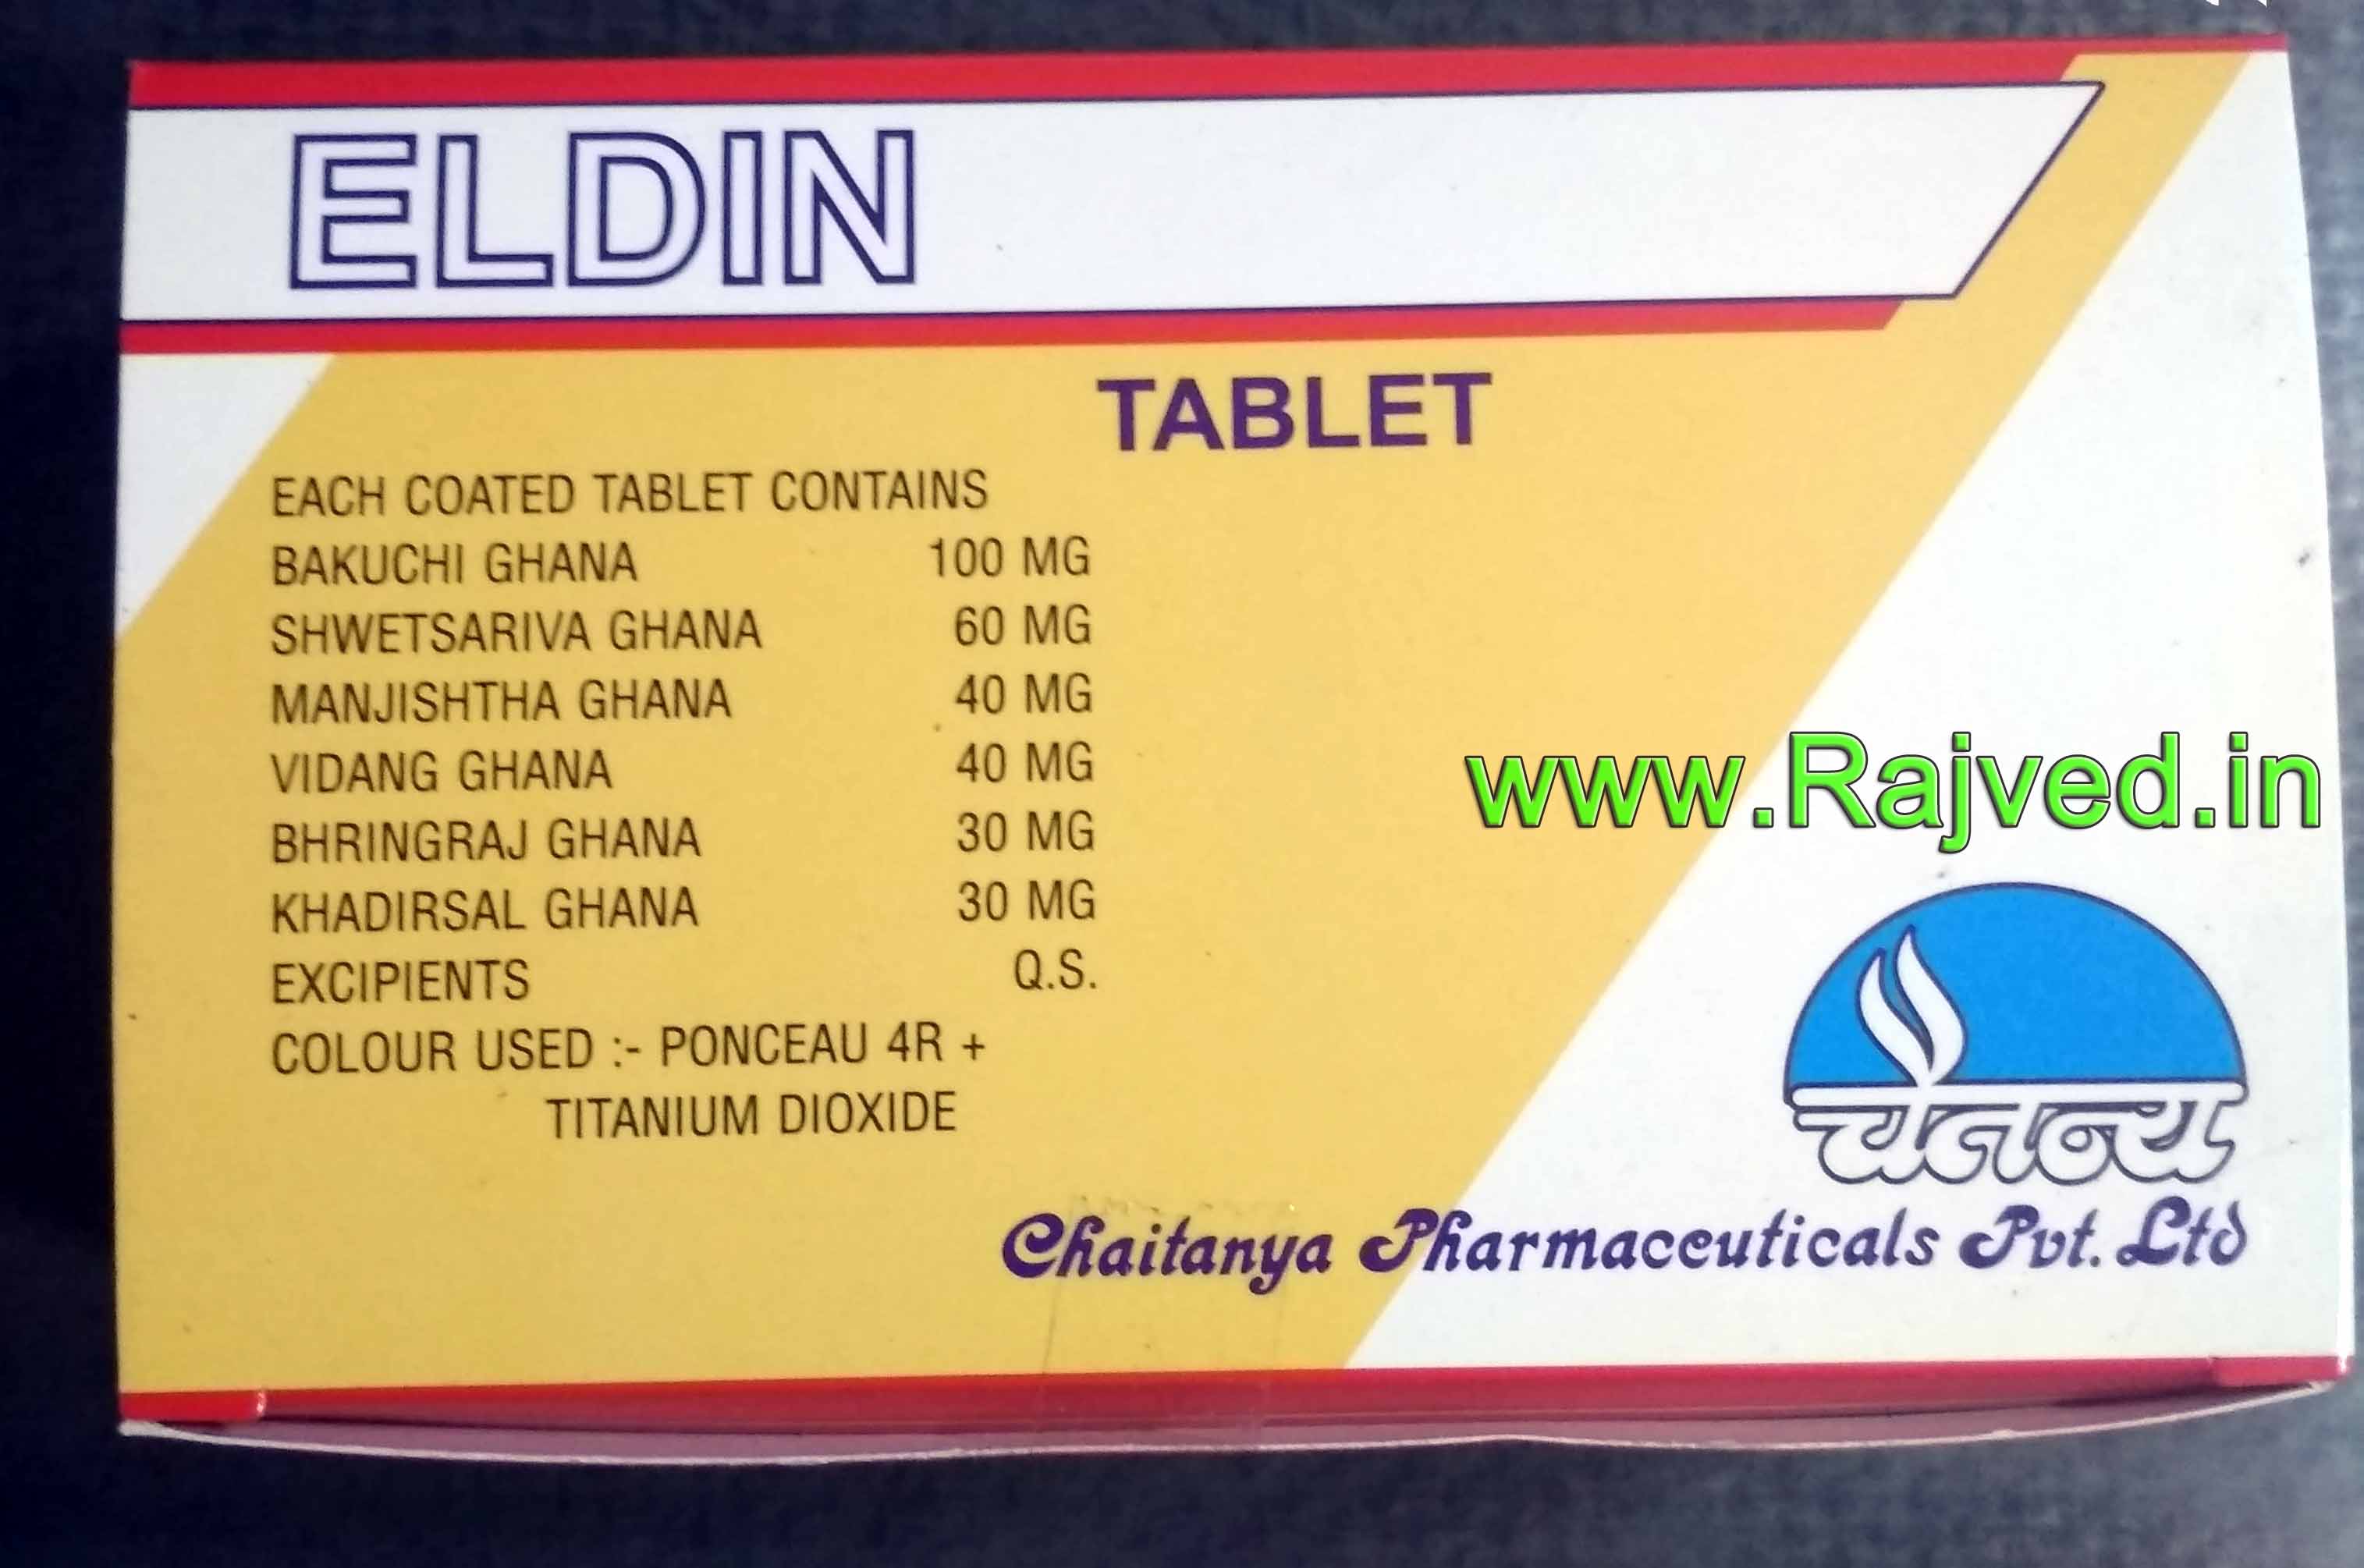 eldin 60 tab upto 20% off Chaitanya Pharmaceuticals